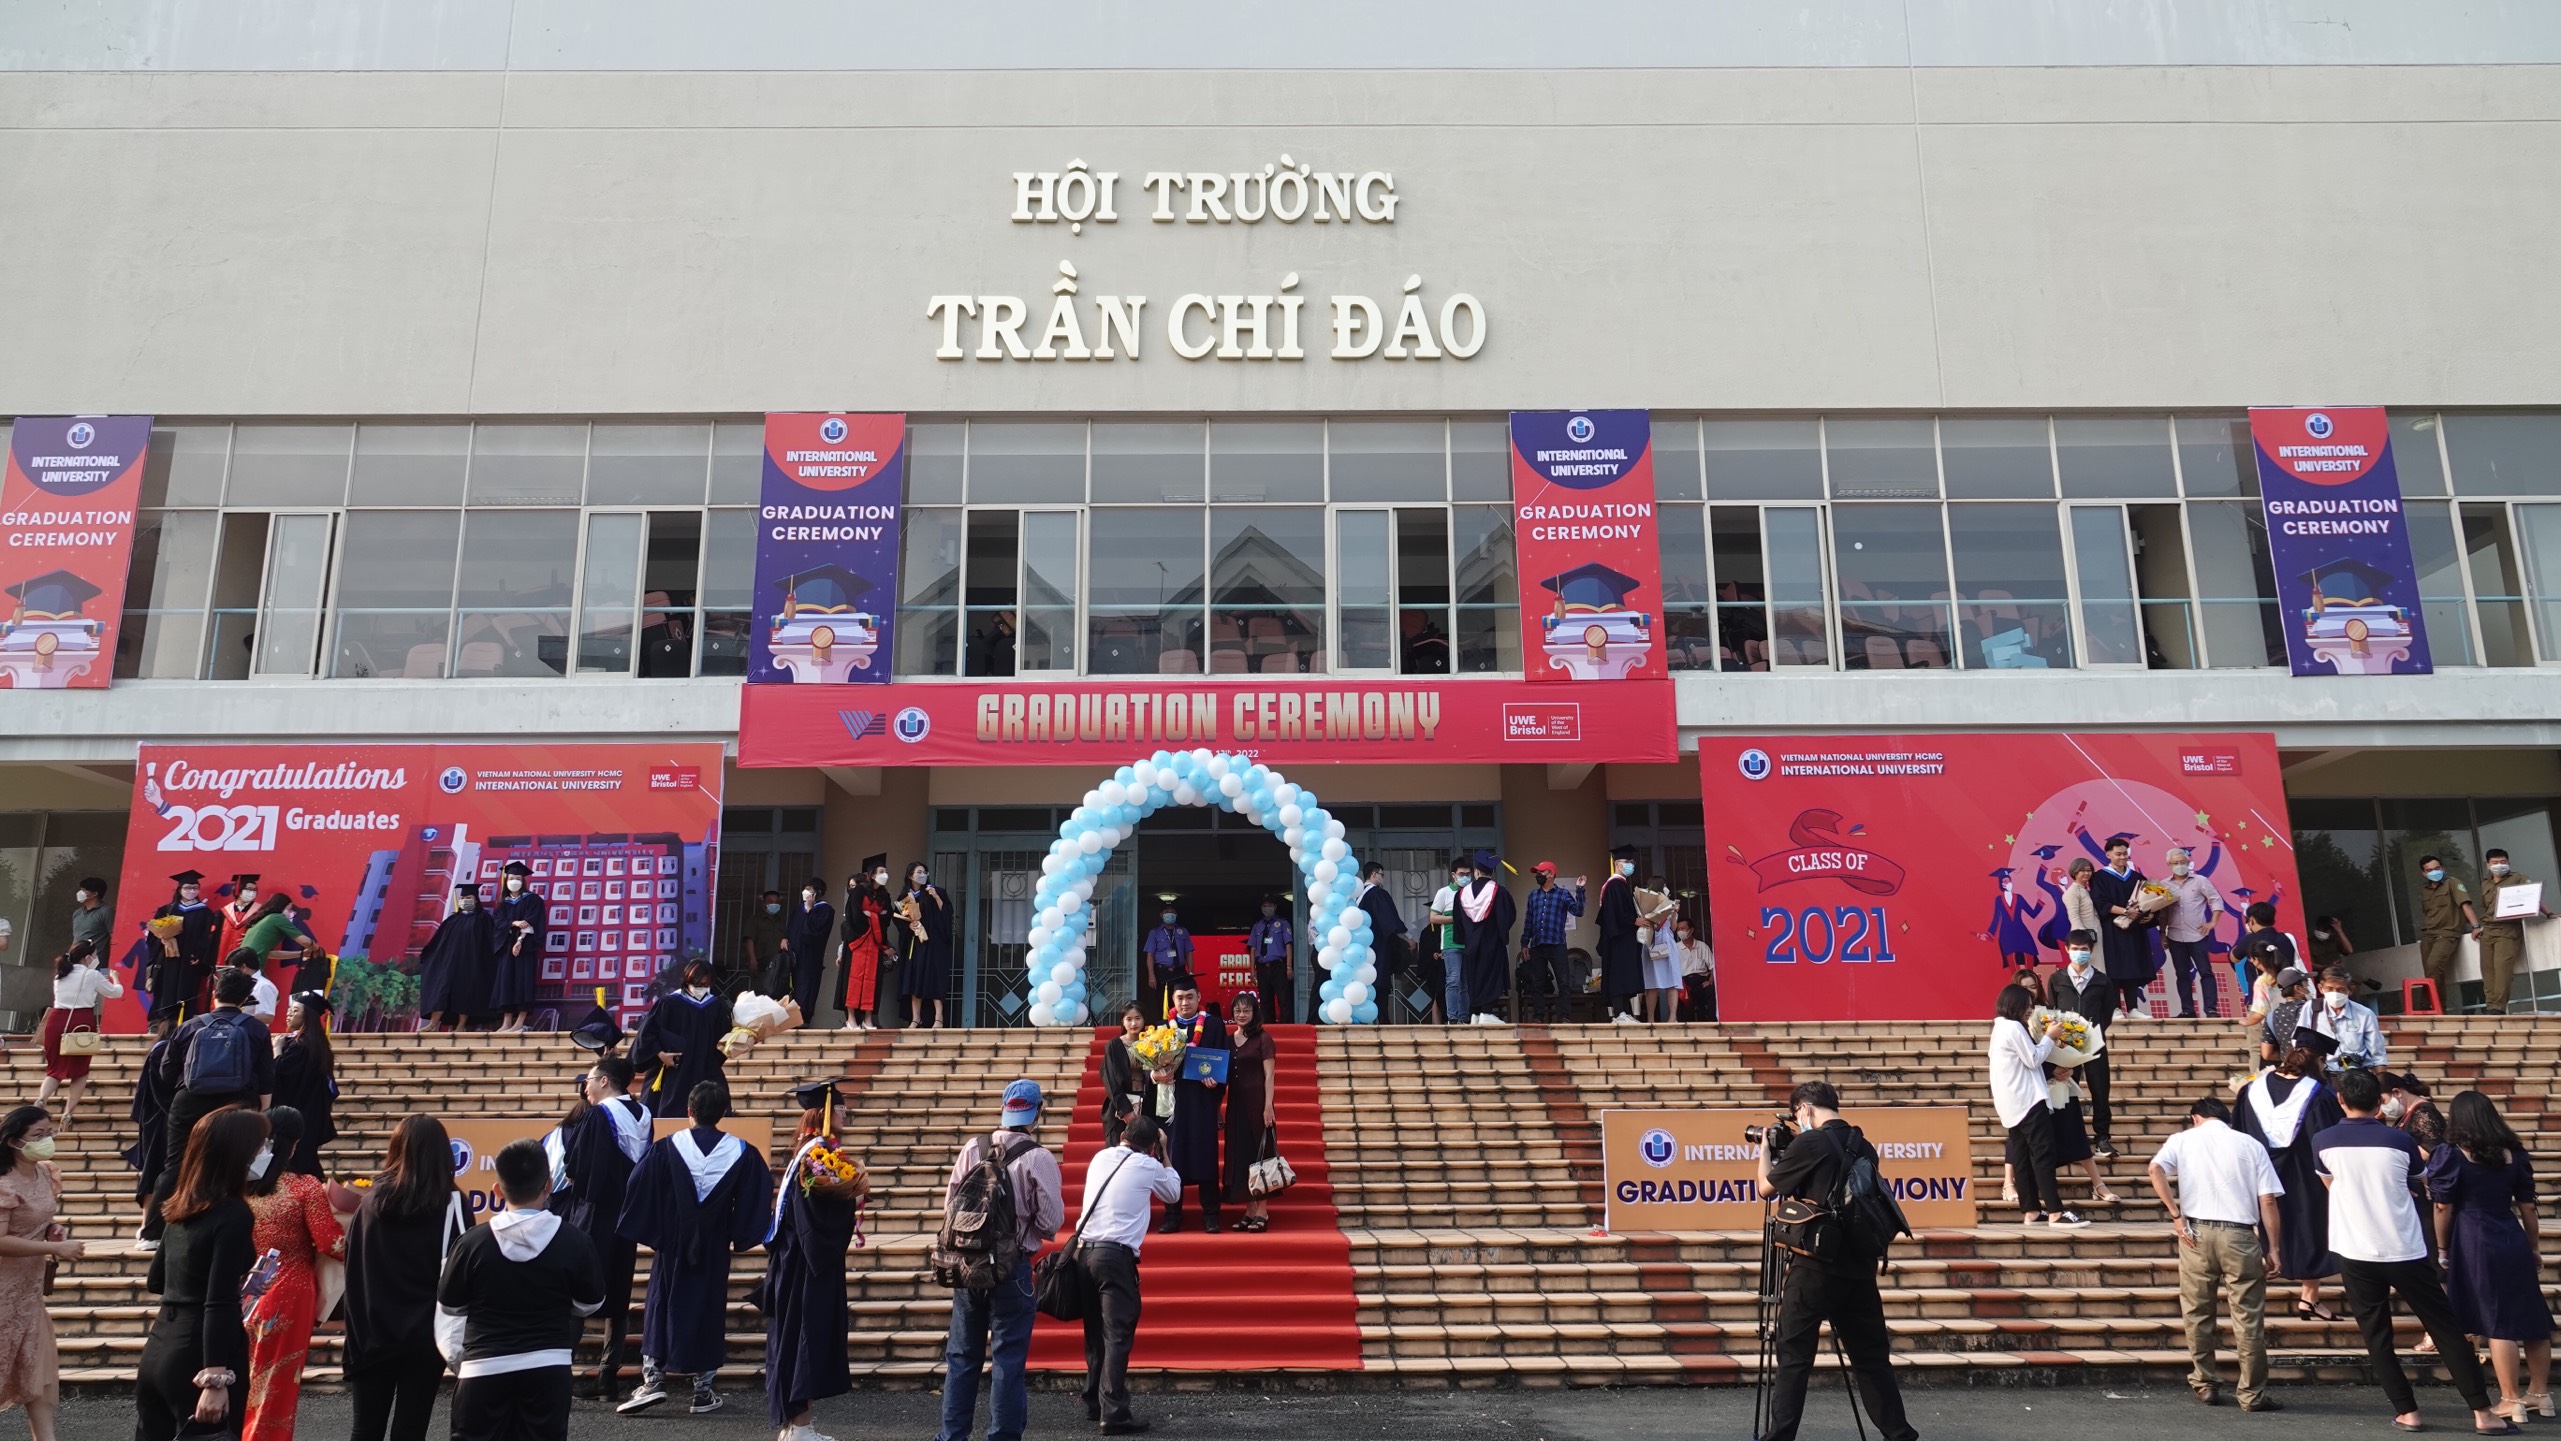 812 FRESH PH.DS, MASTERS, BACHELORS AND BACCALAUREUS OF INTERNATIONAL UNIVERSITY – Vietnam National University GRADUATE IN 2021